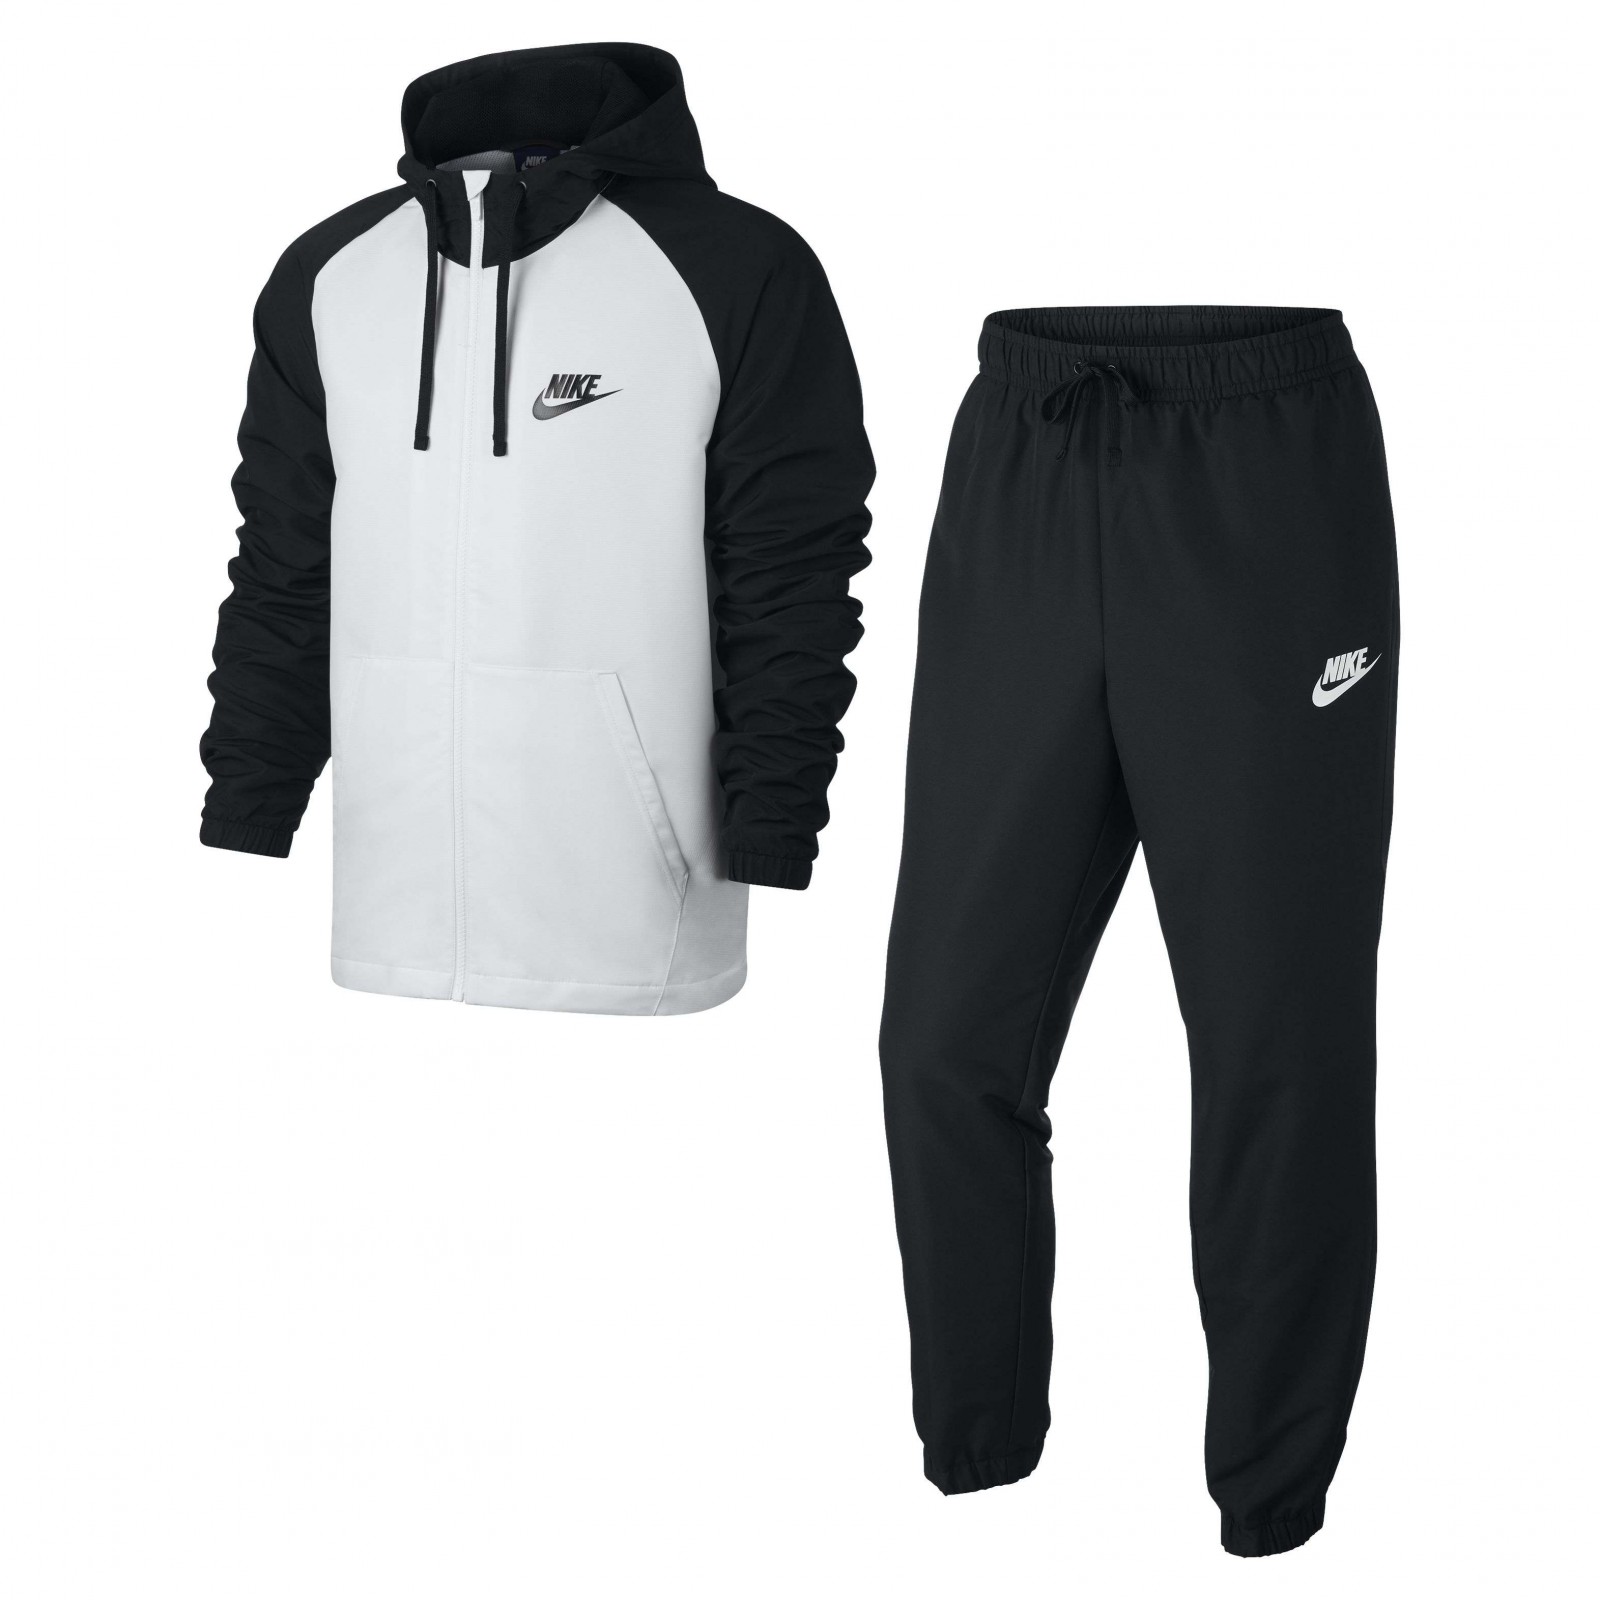 Муж спортивные костюмы. Костюм Nike Sportswear Tracksuit. Костюм Nike NSW Woven men's track Suit черный.